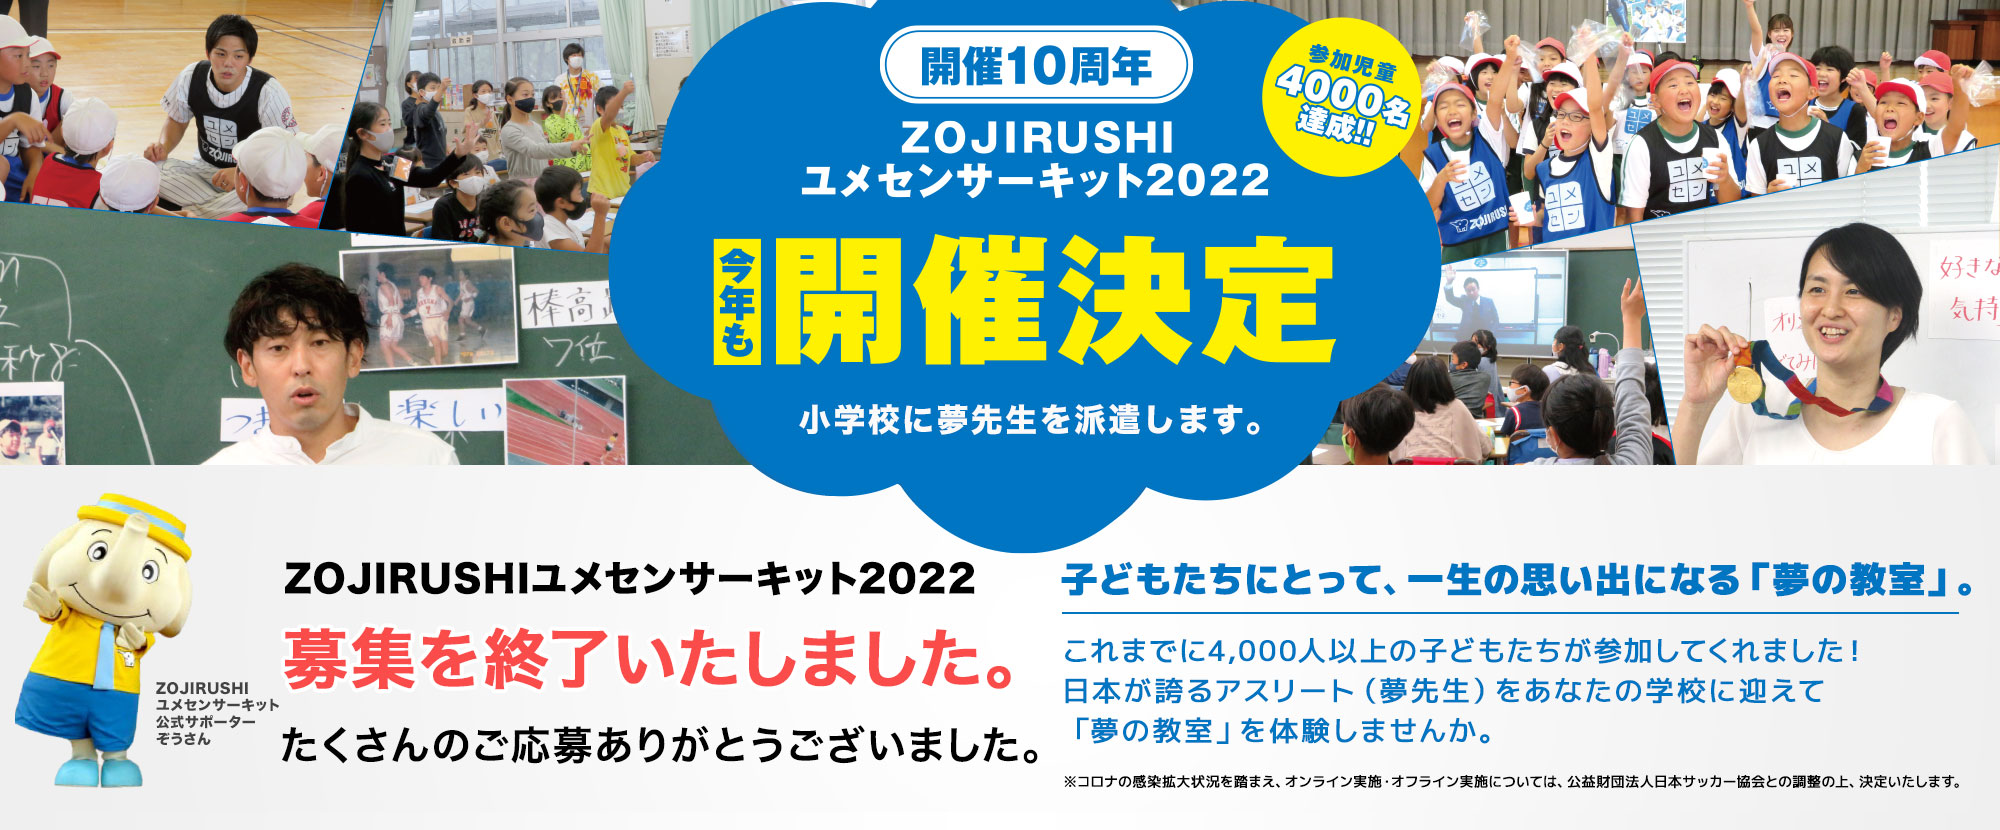 ZOJIRUSHIユメセンサーキット2022